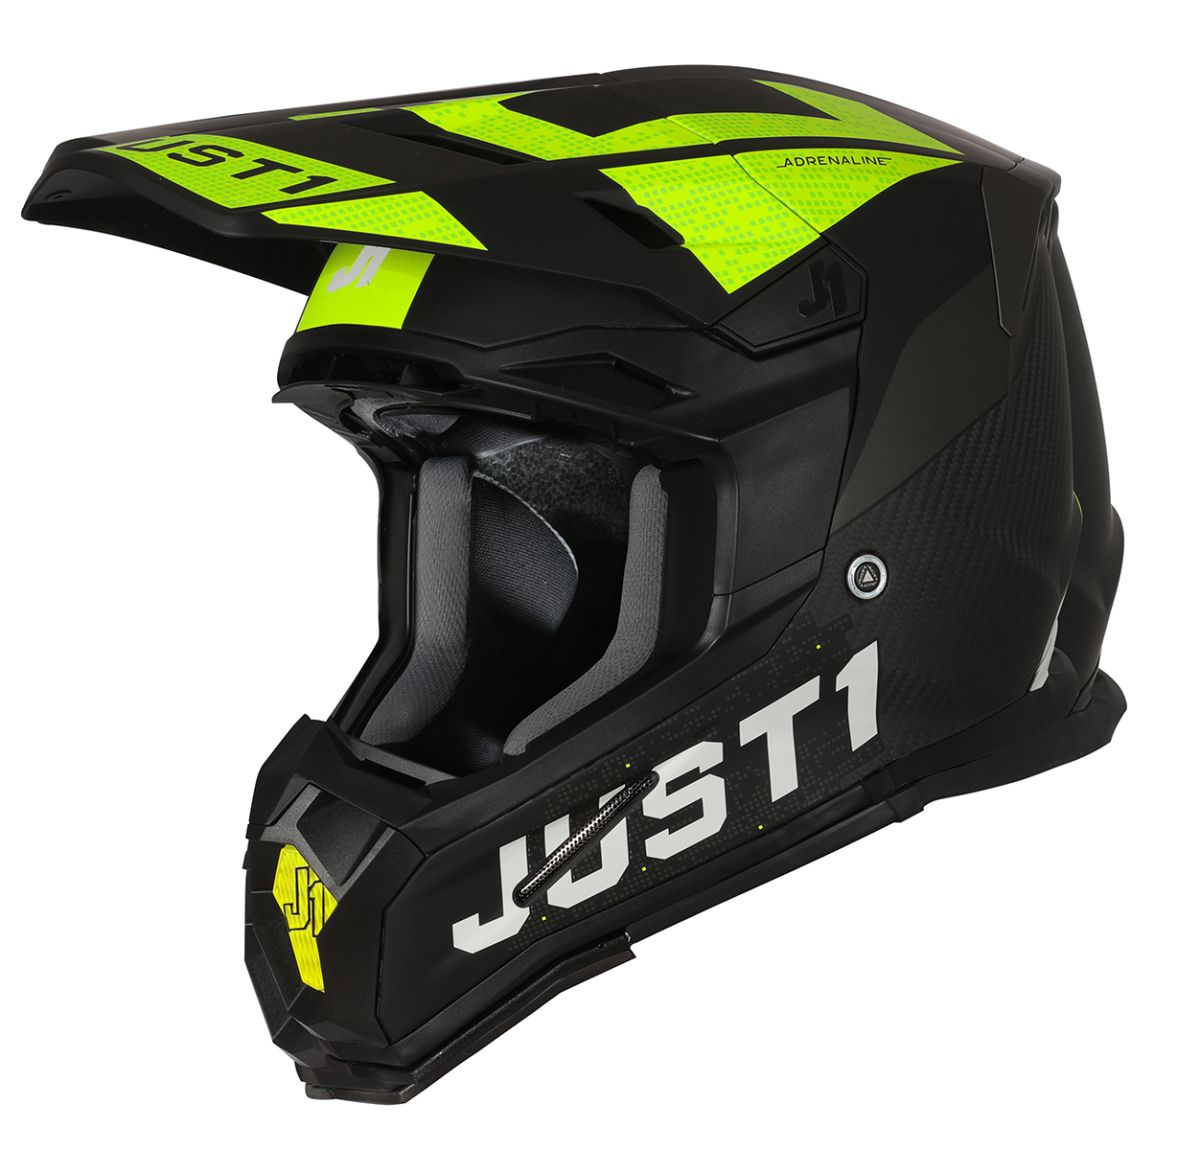 Image of Just1 Helmet J-22 Adrenaline Schwarz Gelb Fluo Carbon Matt Crosshelm Größe L